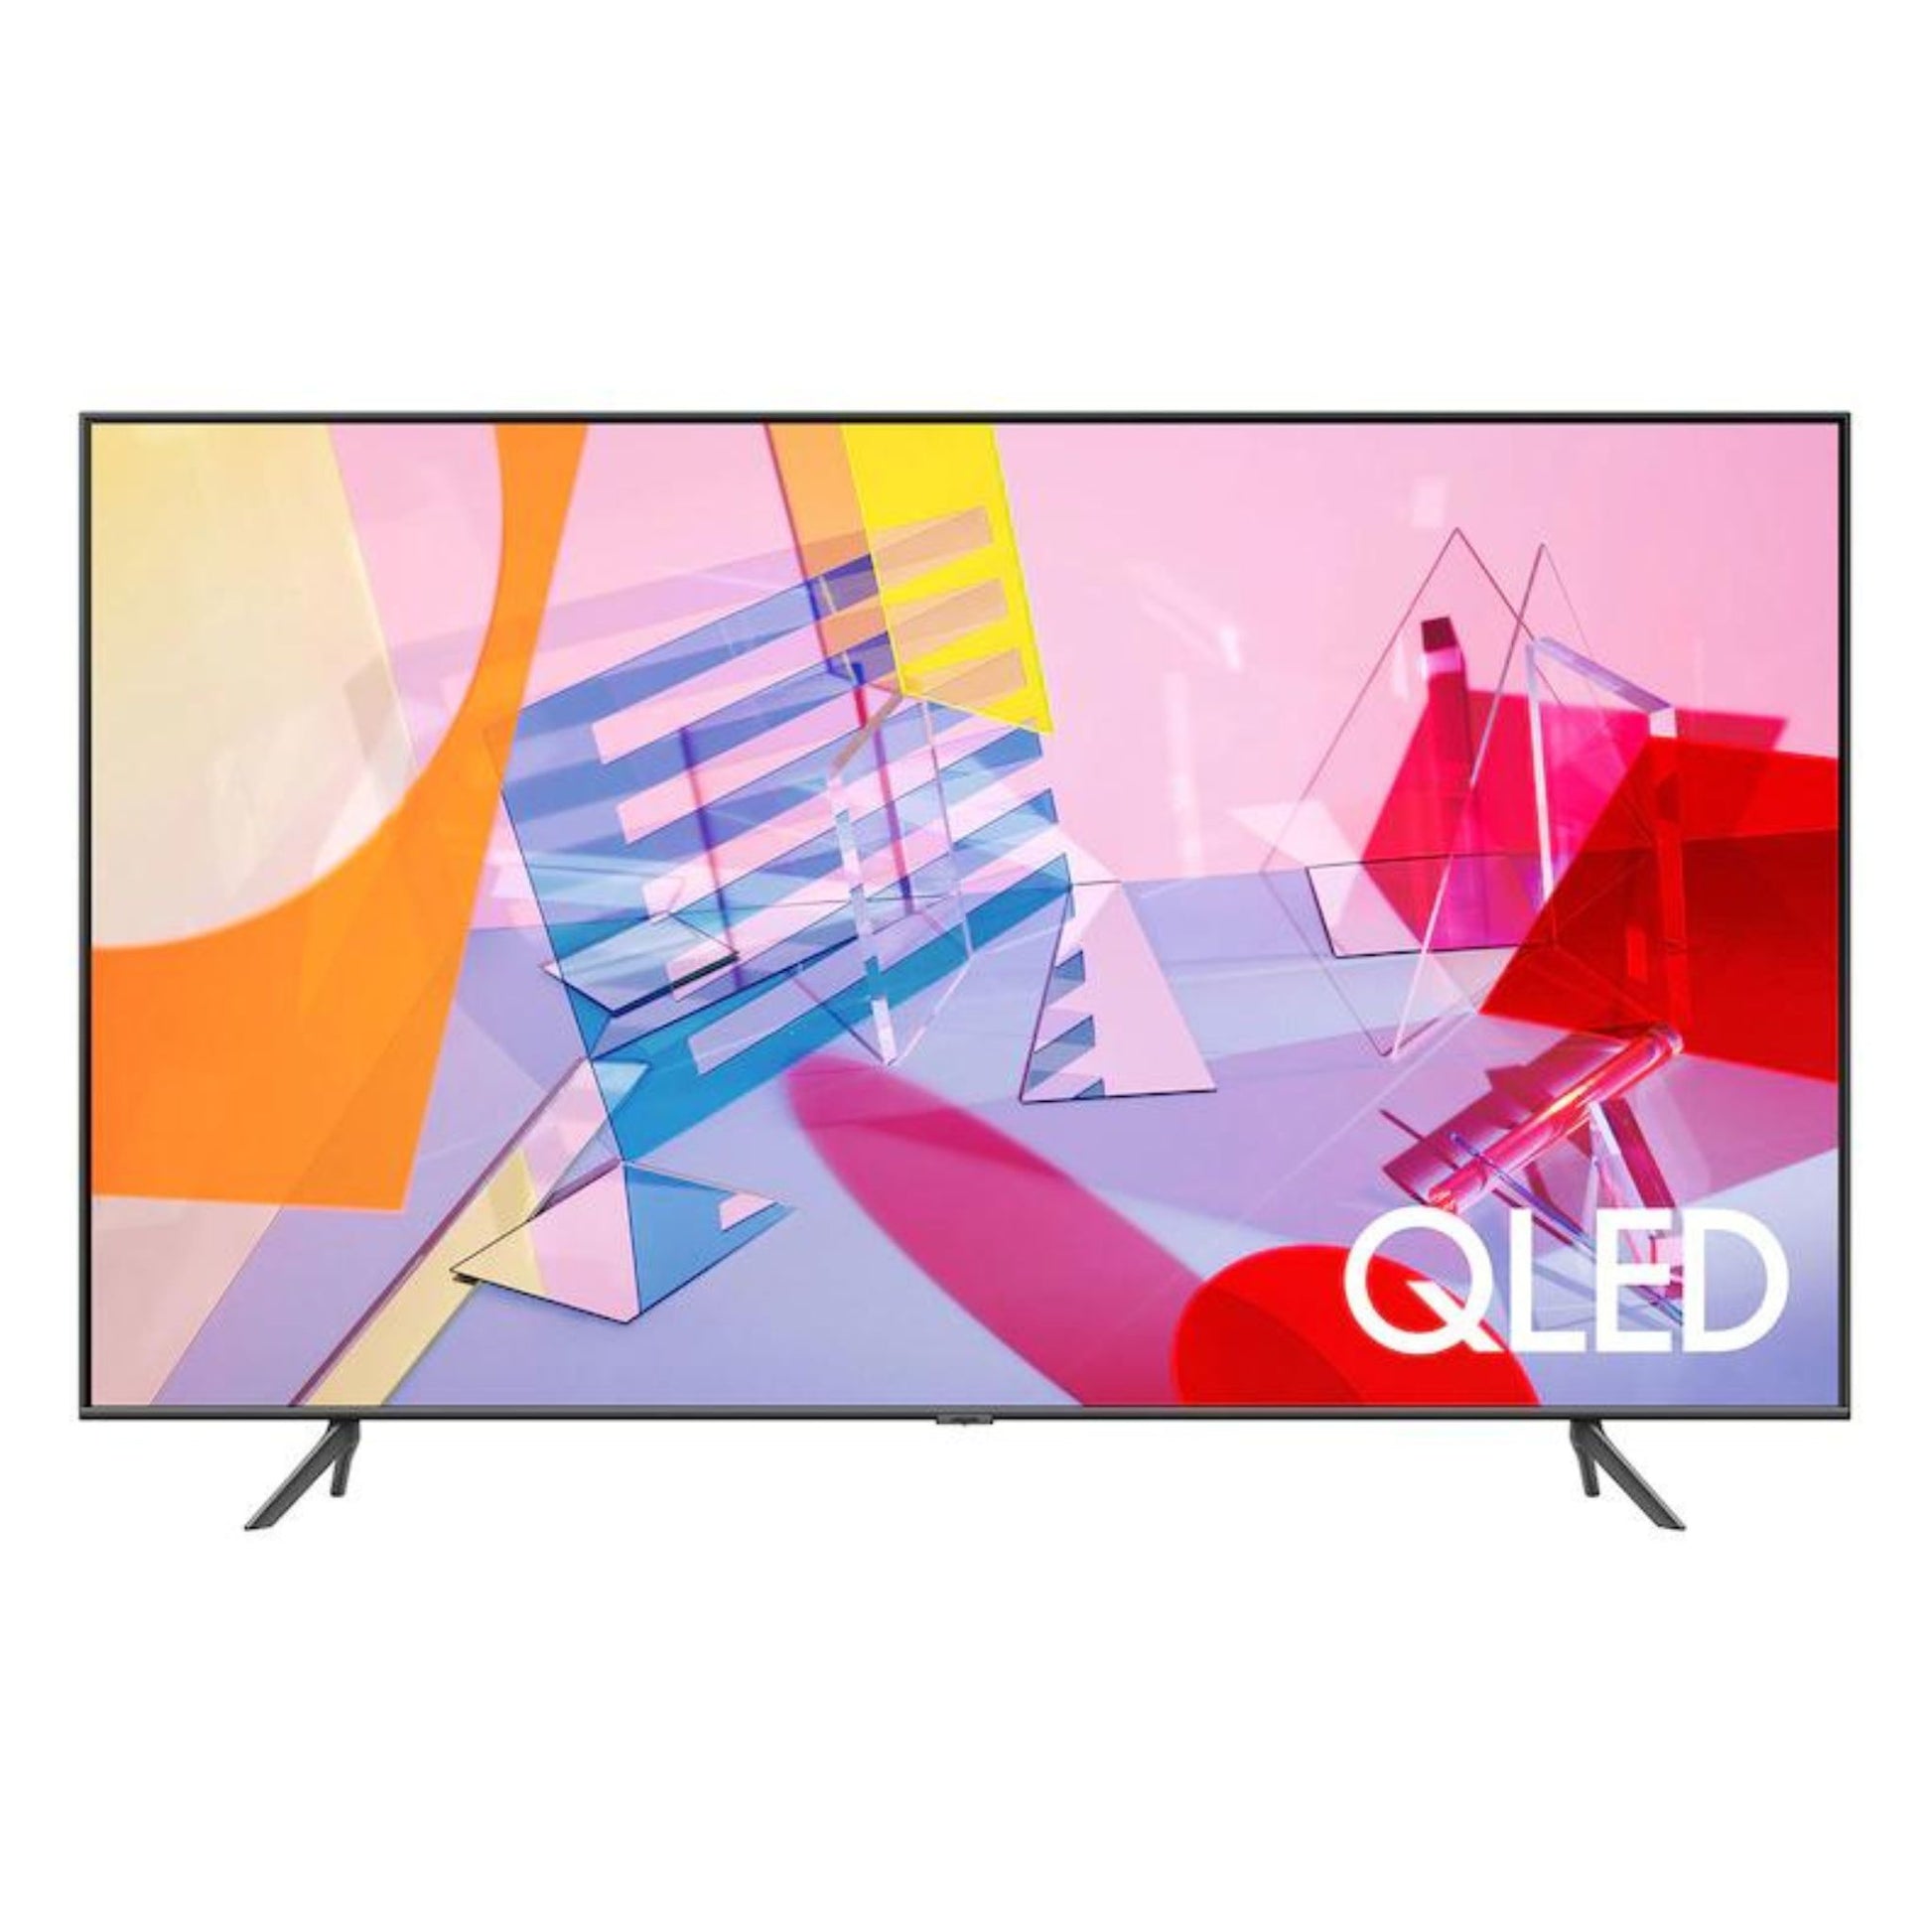 Samsung 75 inch Smart QLED TV, 75Q6T